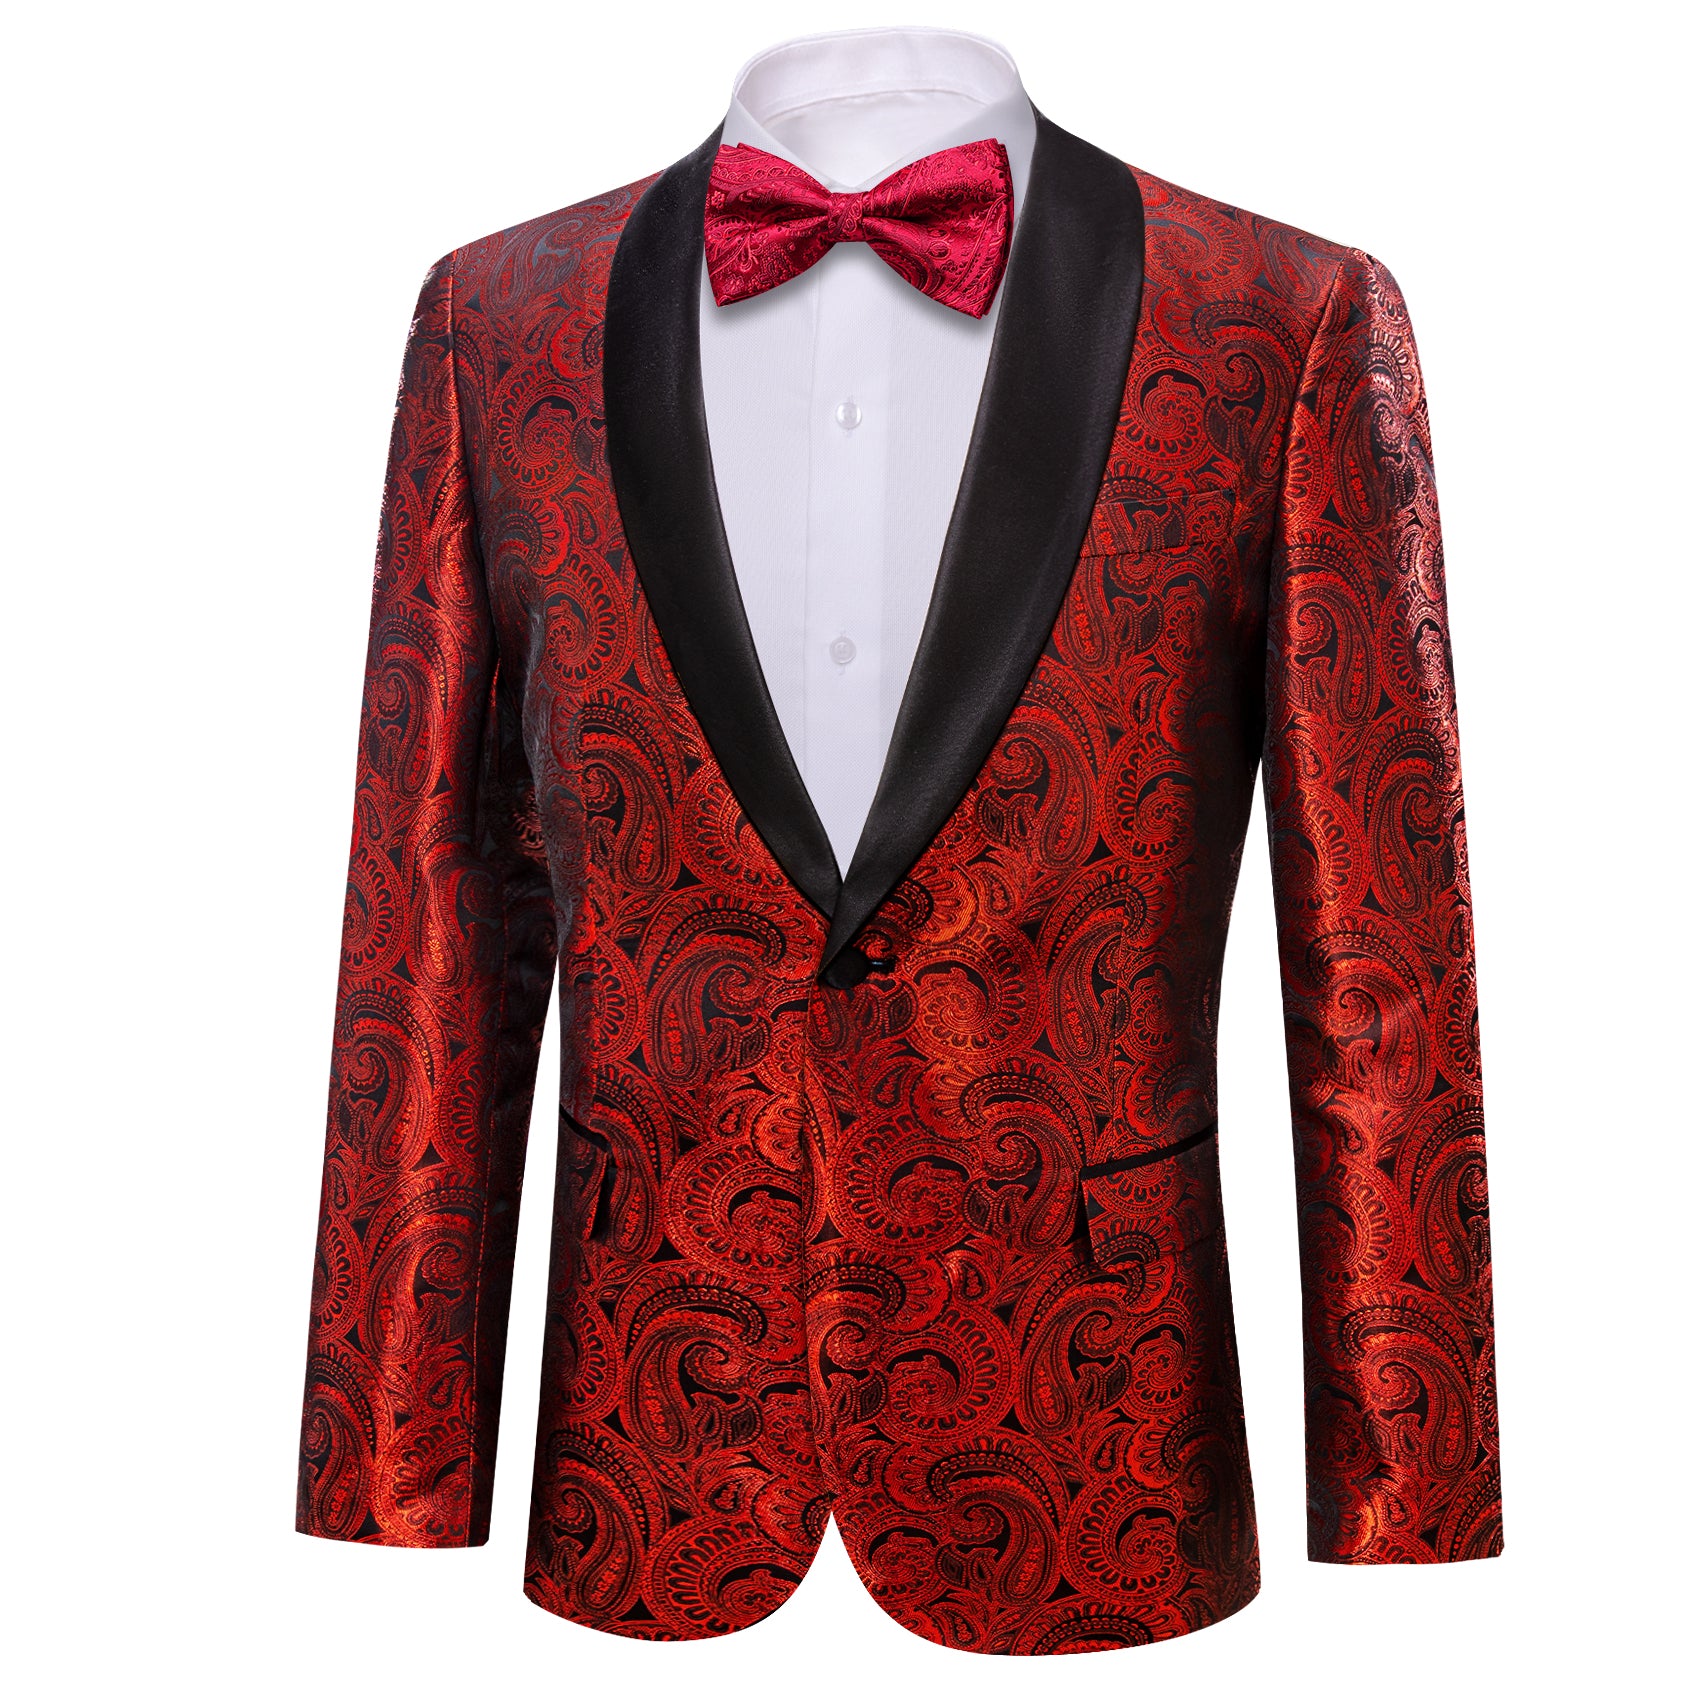 Men's Dress Party Red Floral Suit Jacket Slim One Button Stylish Blazer